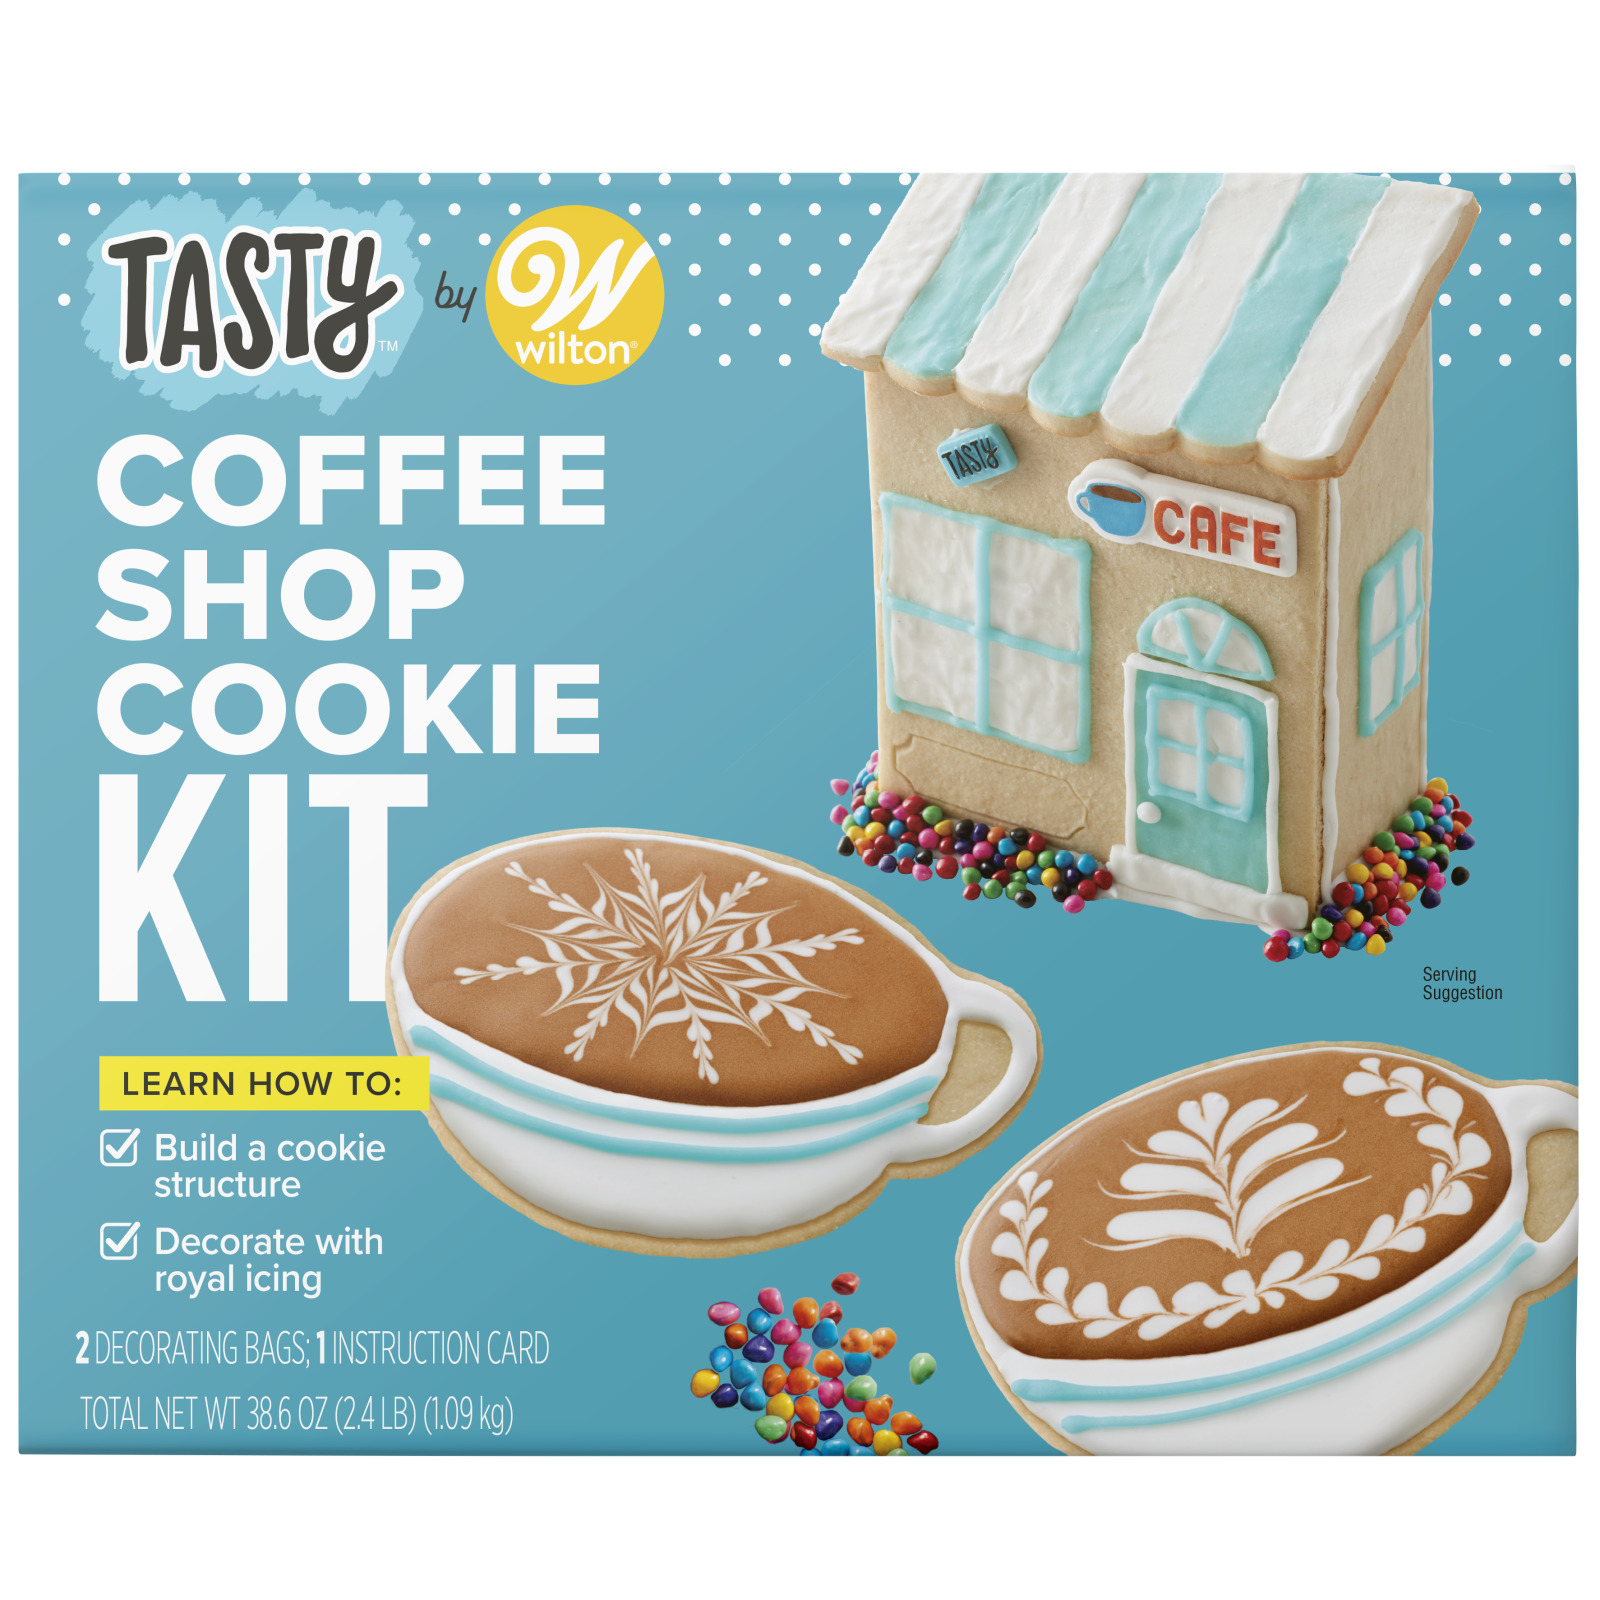 Tasty Coffee Shop Cookie Kit, Item #1900-0-0054